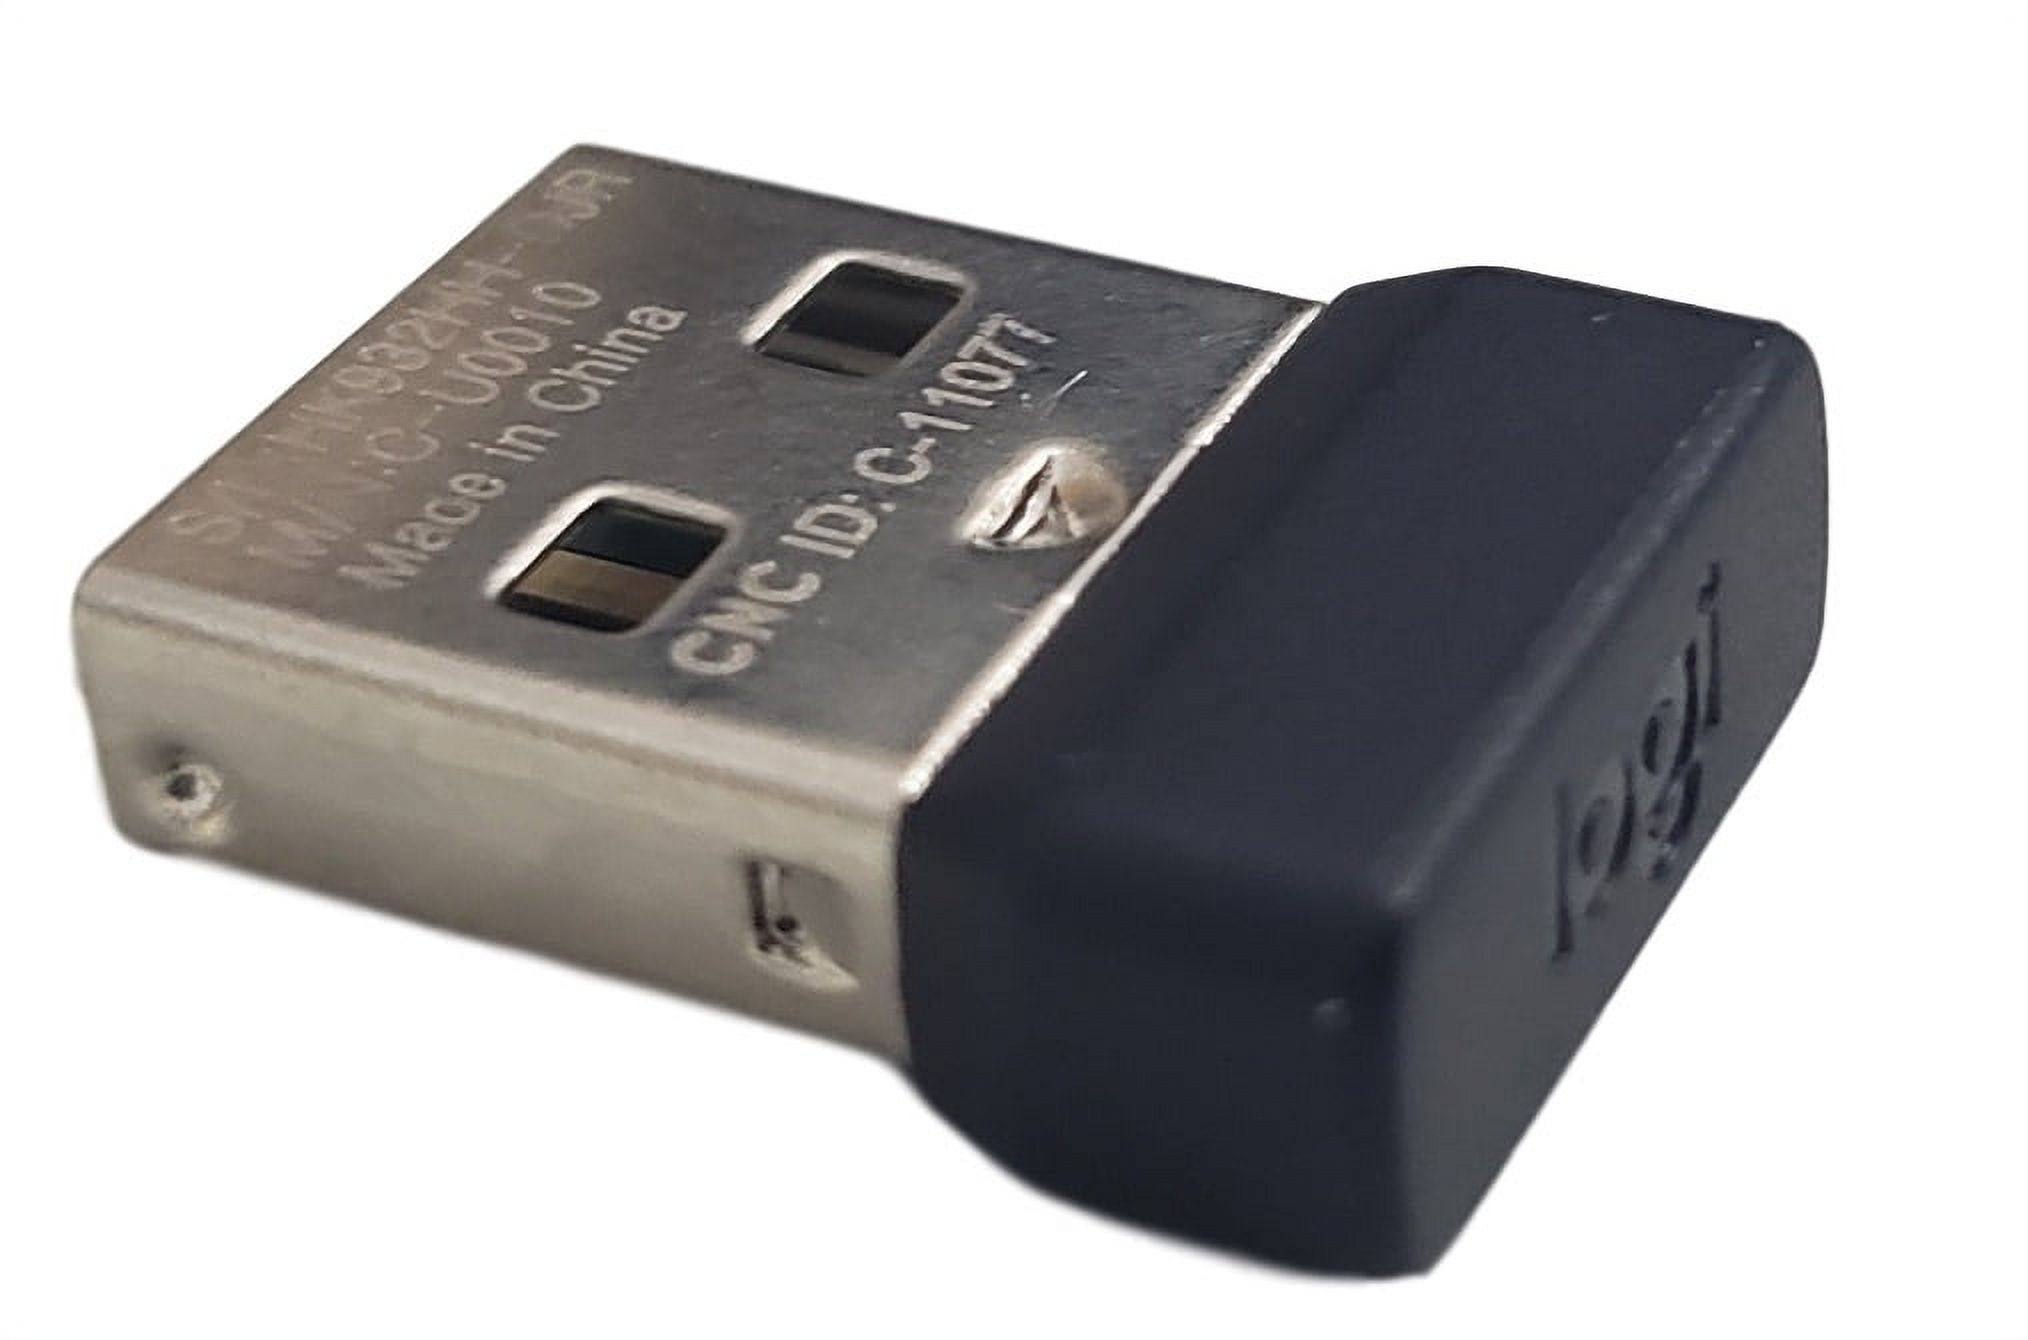 Logitech USB Nano Receiver For MK270 Combo, MK235, M220, M185 mouse, MK240n, MK345, MK320, M150, K345, K260, M275, M330, M305, K270, M525 - 993-001106 - image 1 of 2